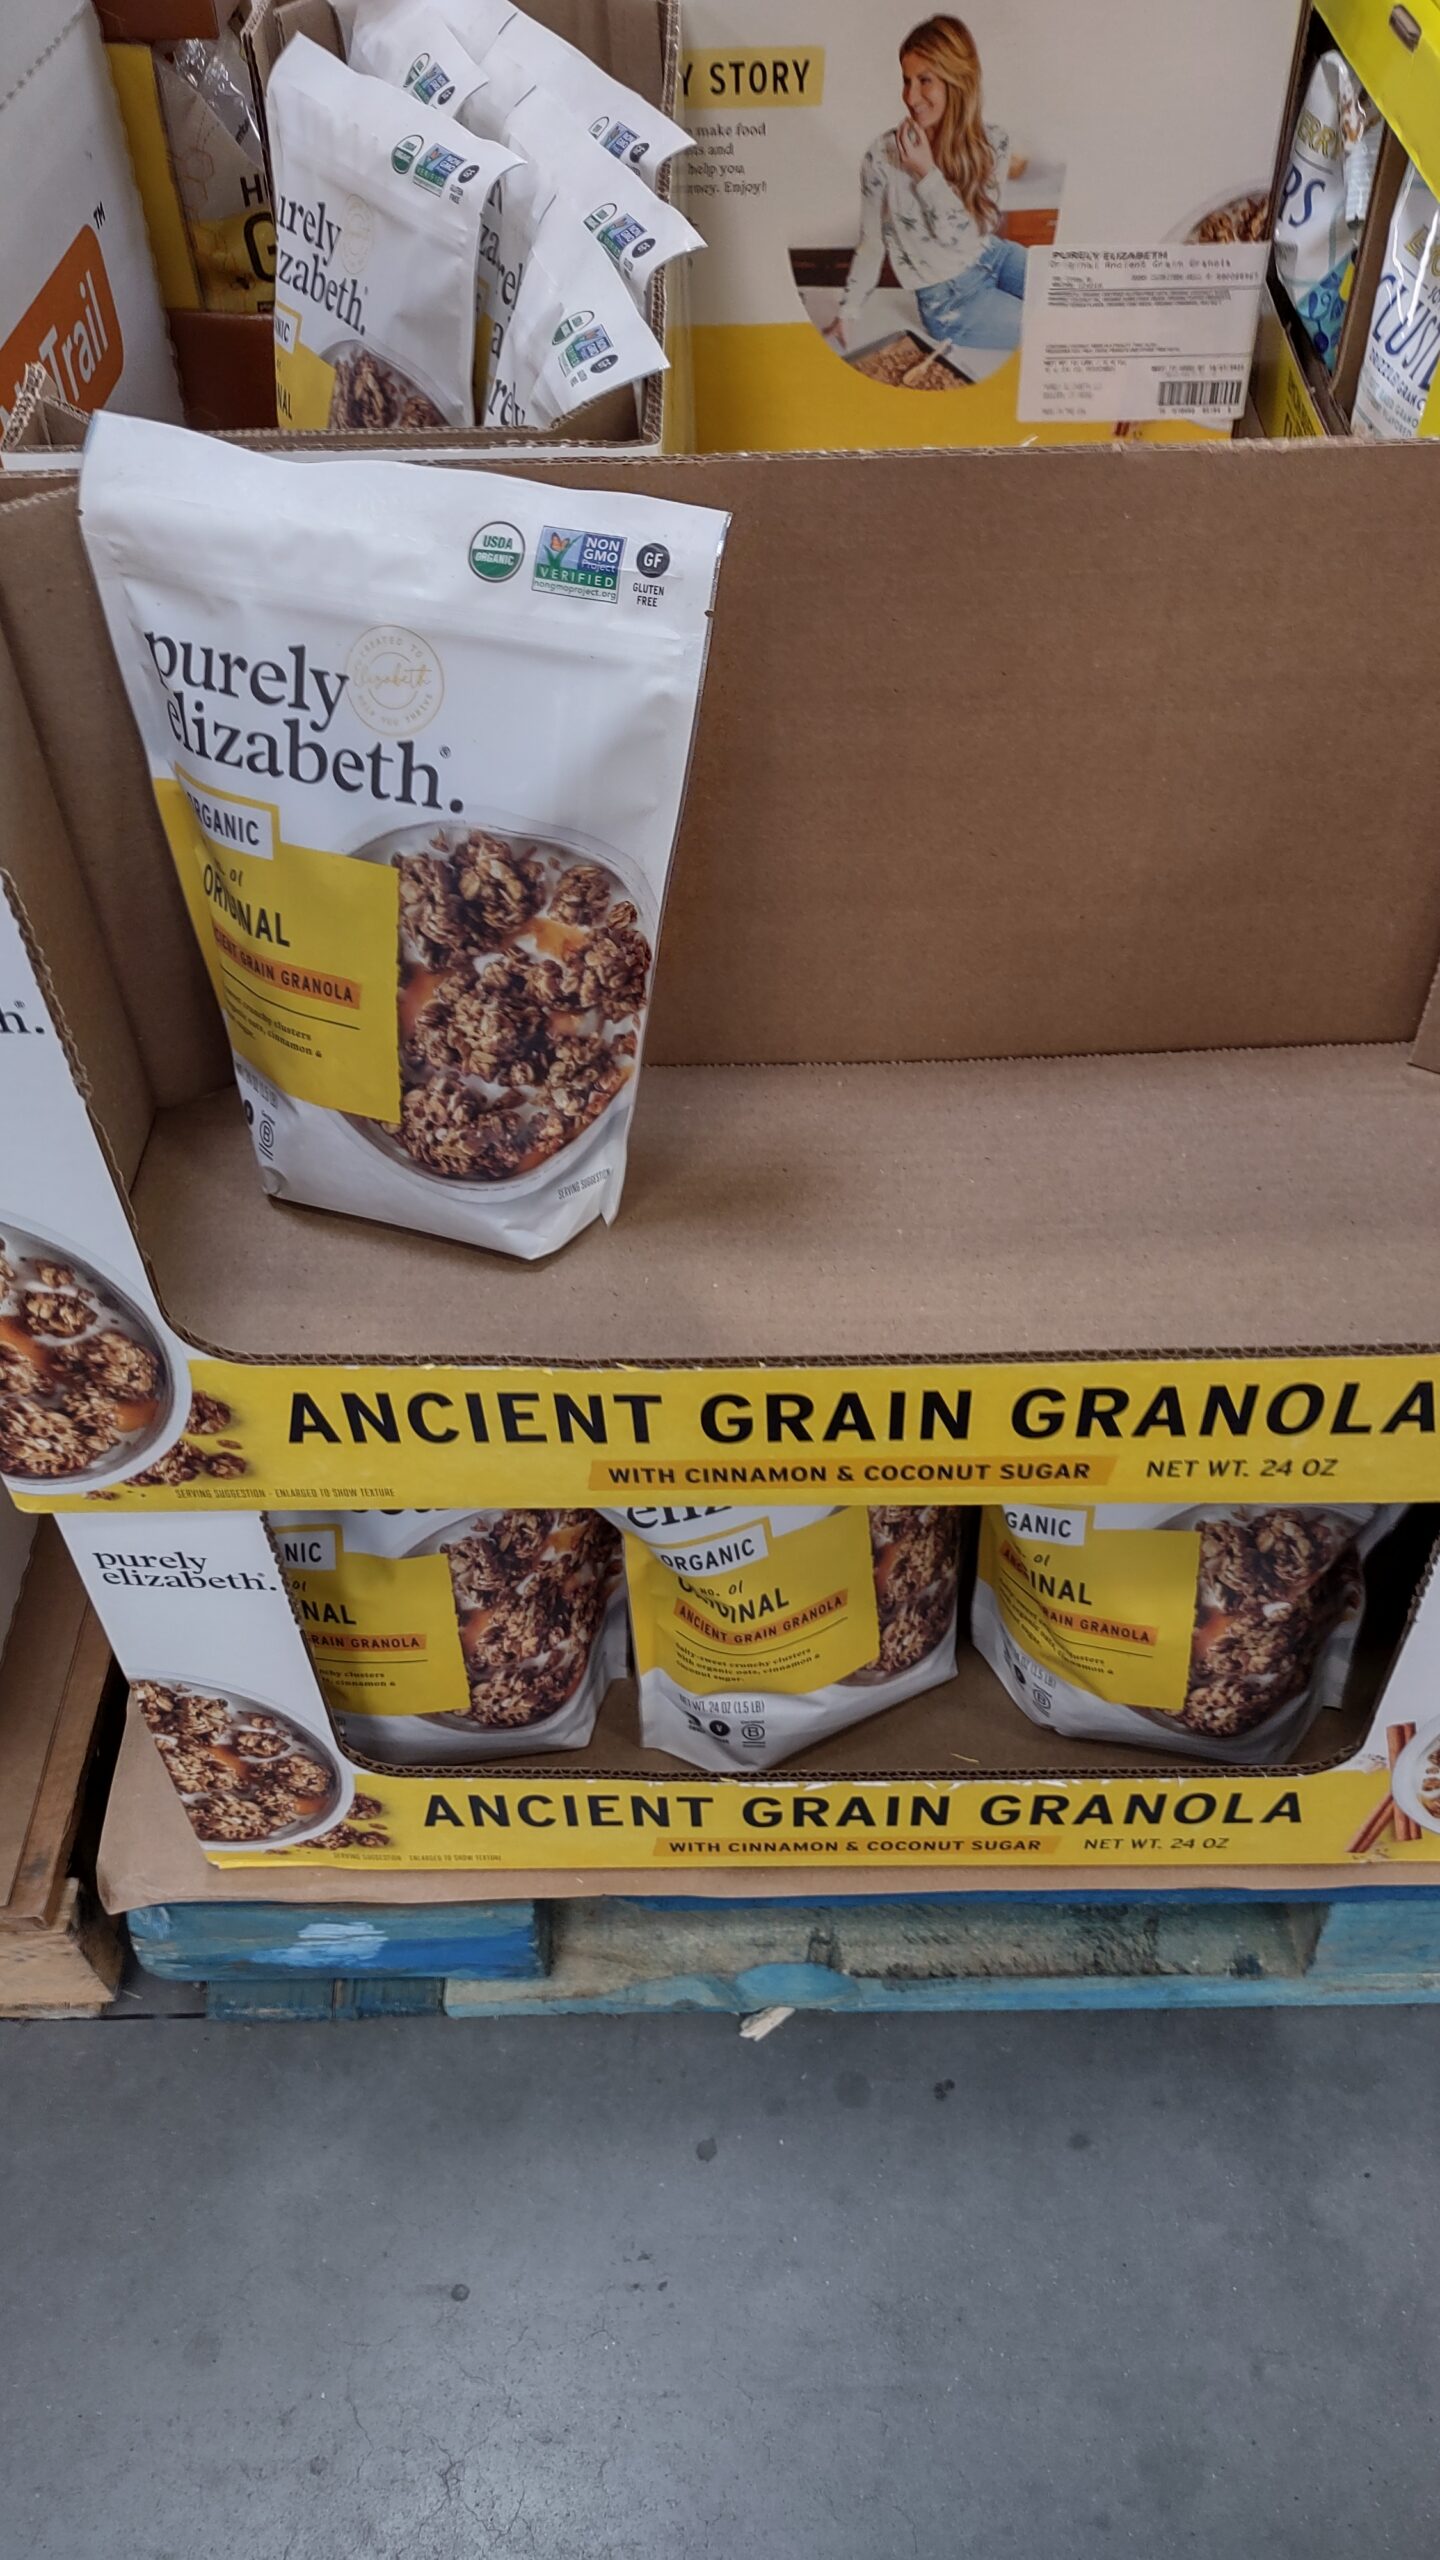 Purely Elizabeth Organic Ancient Granola $4.91 at Sam’s